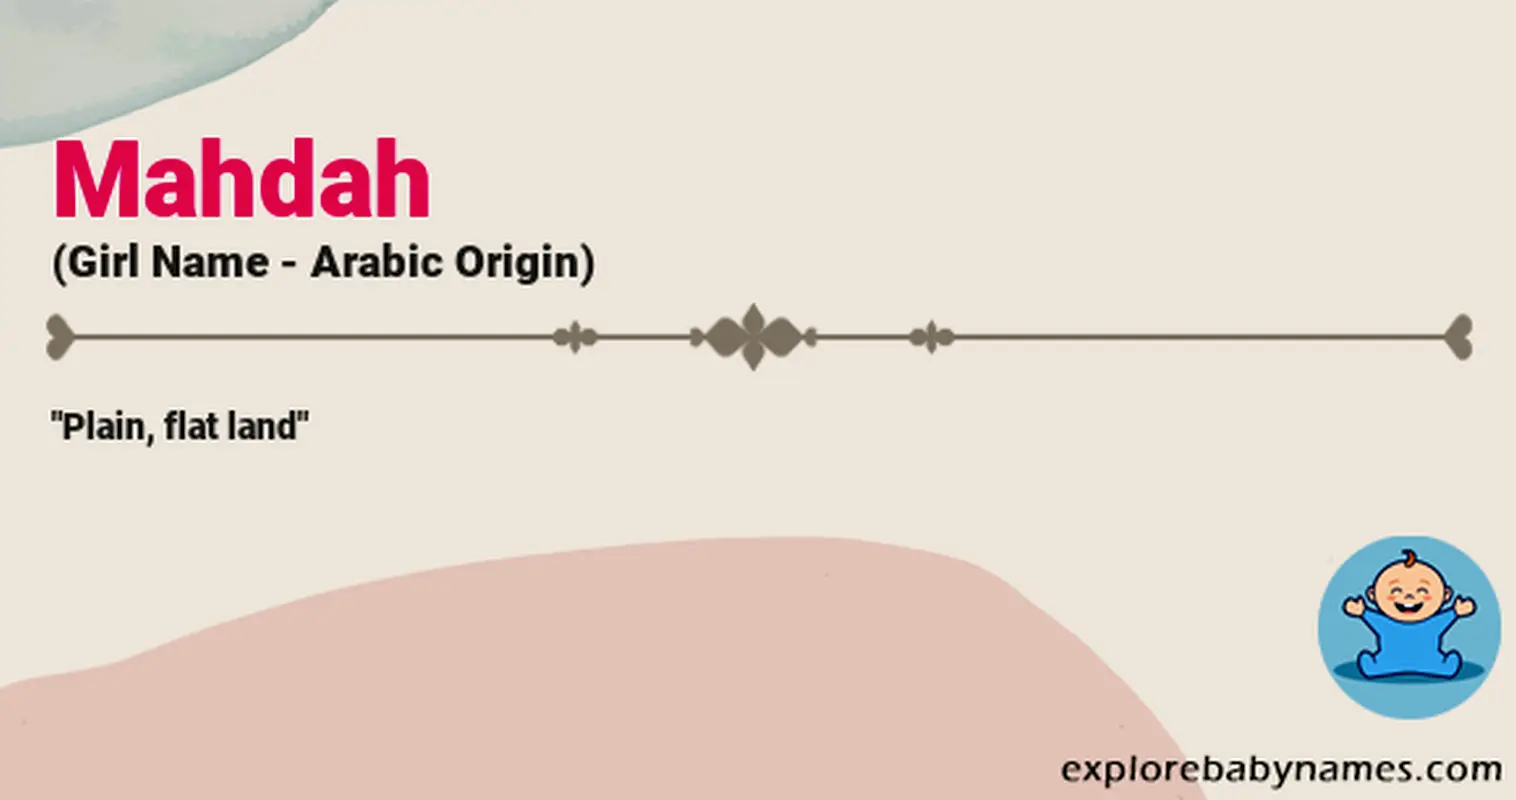 Meaning of Mahdah